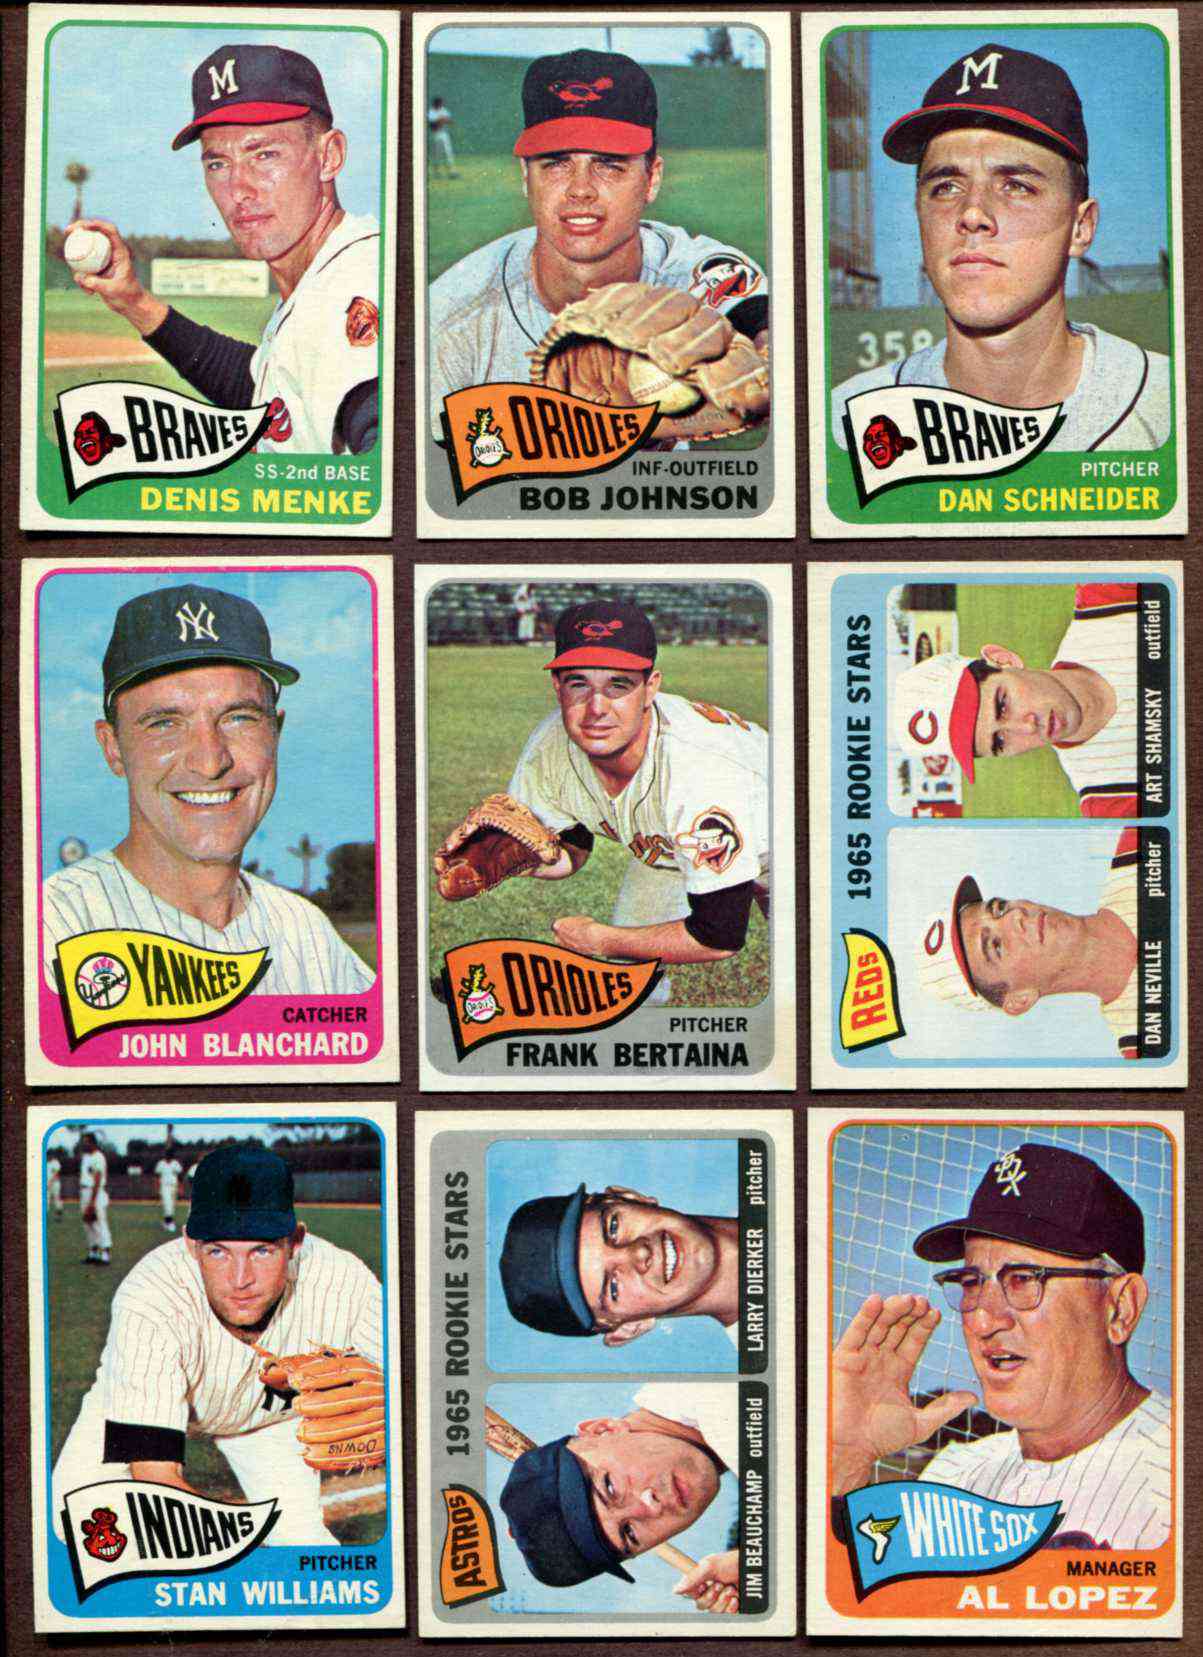 1965 Topps #414 Al Lopez MGR (White Sox) Baseball cards value